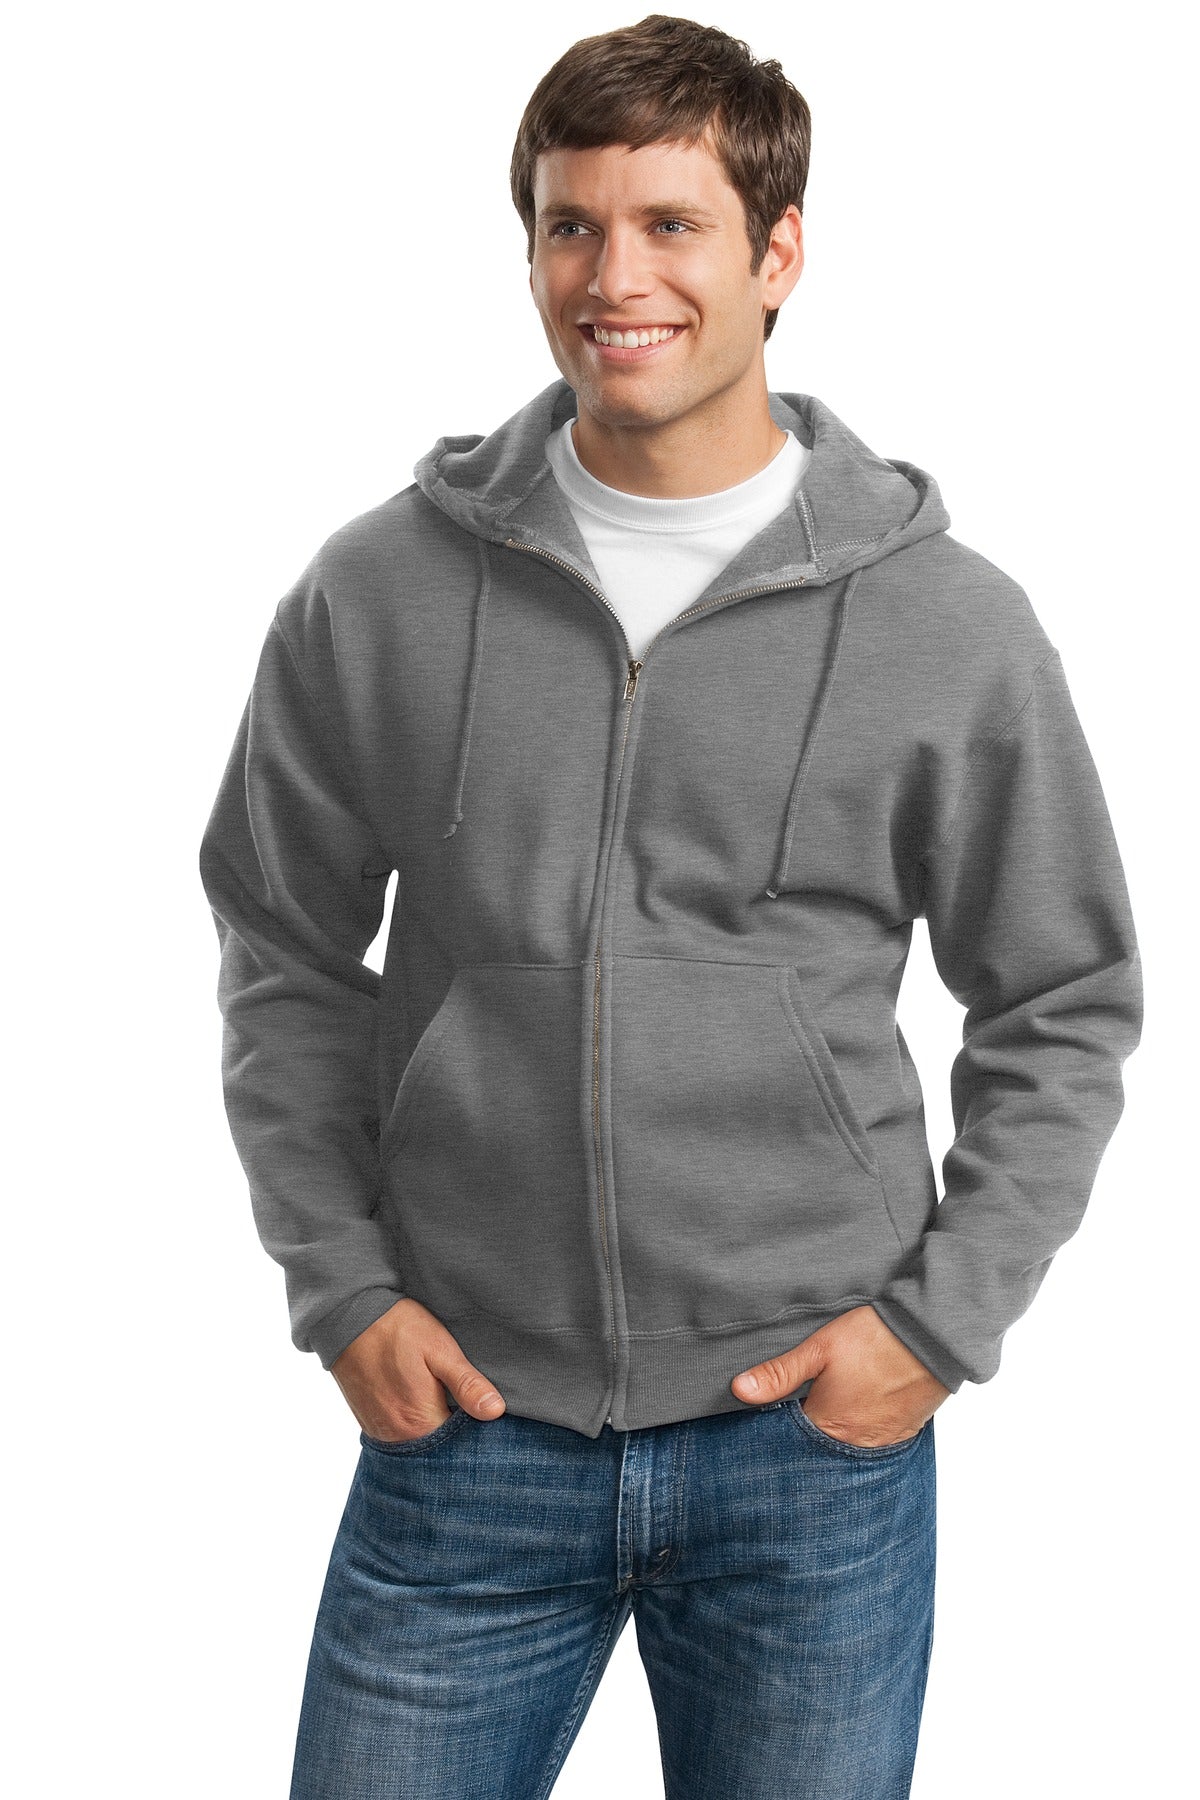 JERZEES® Super Sweats® NuBlend® - Full-Zip Hooded Sweatshirt.  4999M